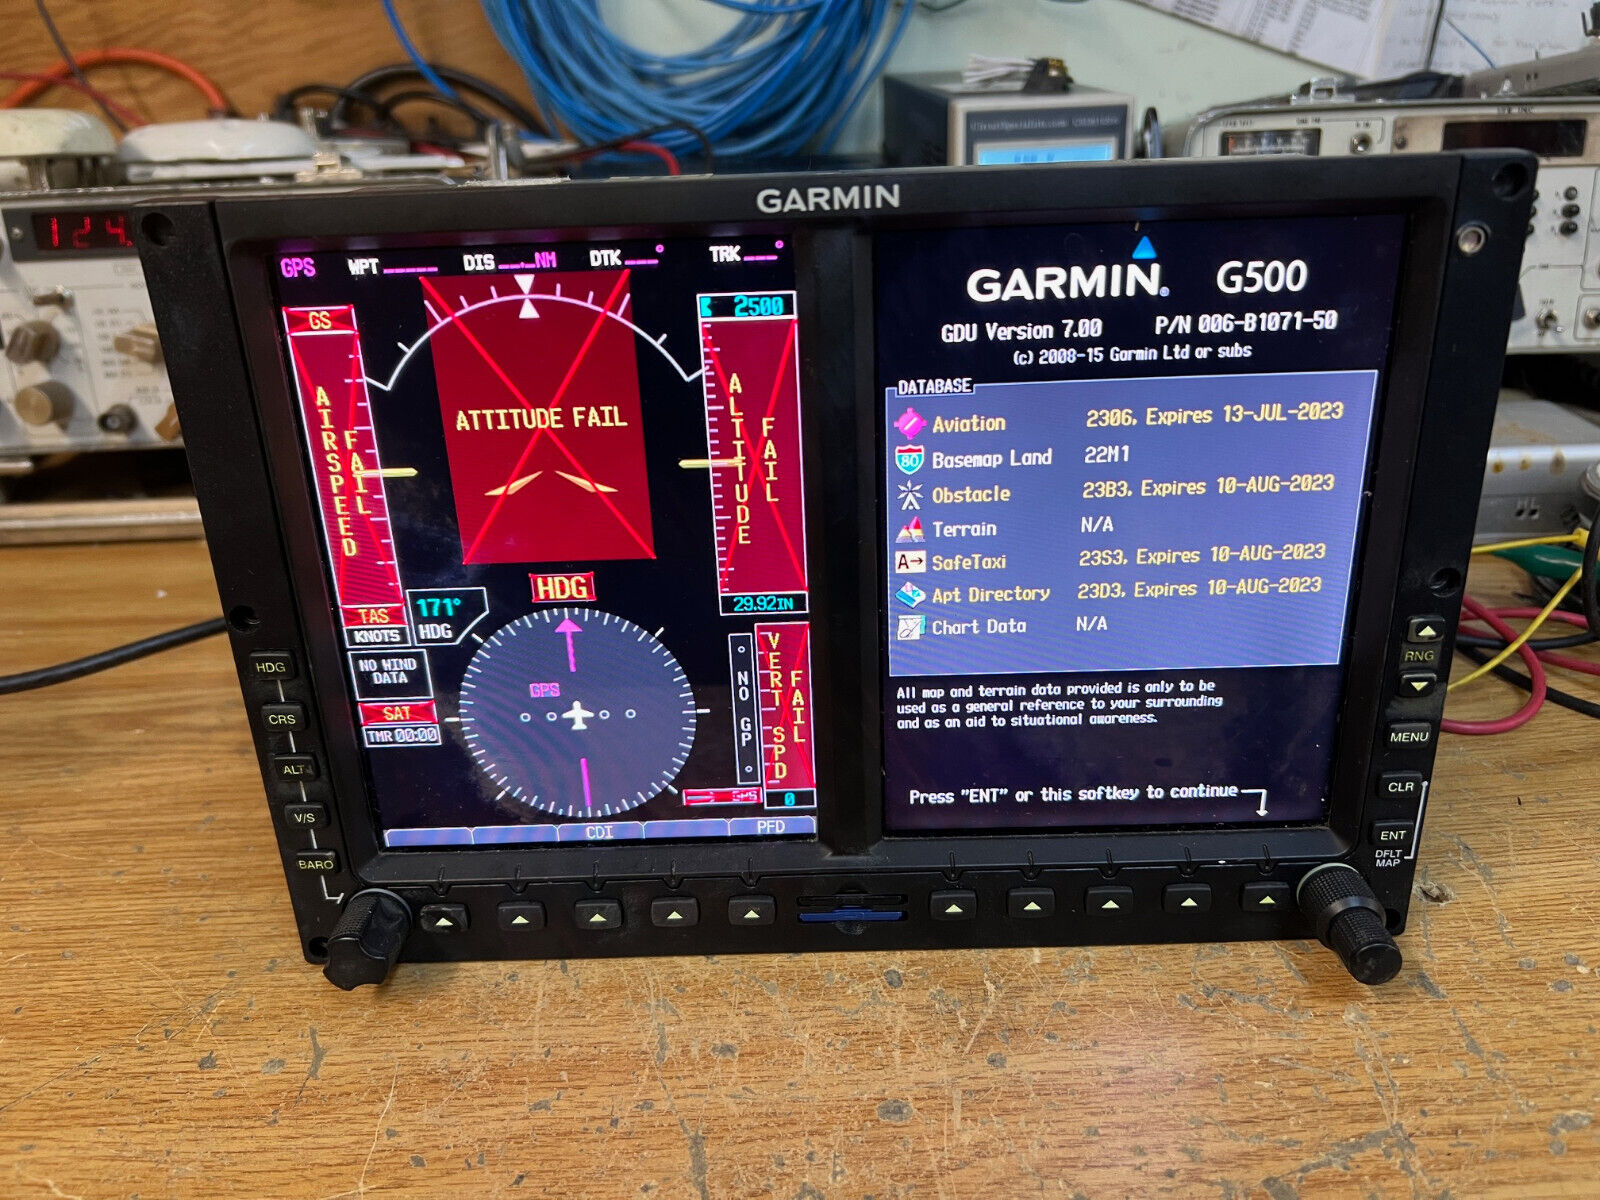 GARMIN G-500 ELECTRONIC FLIGHT DISPLAY SYSTEM